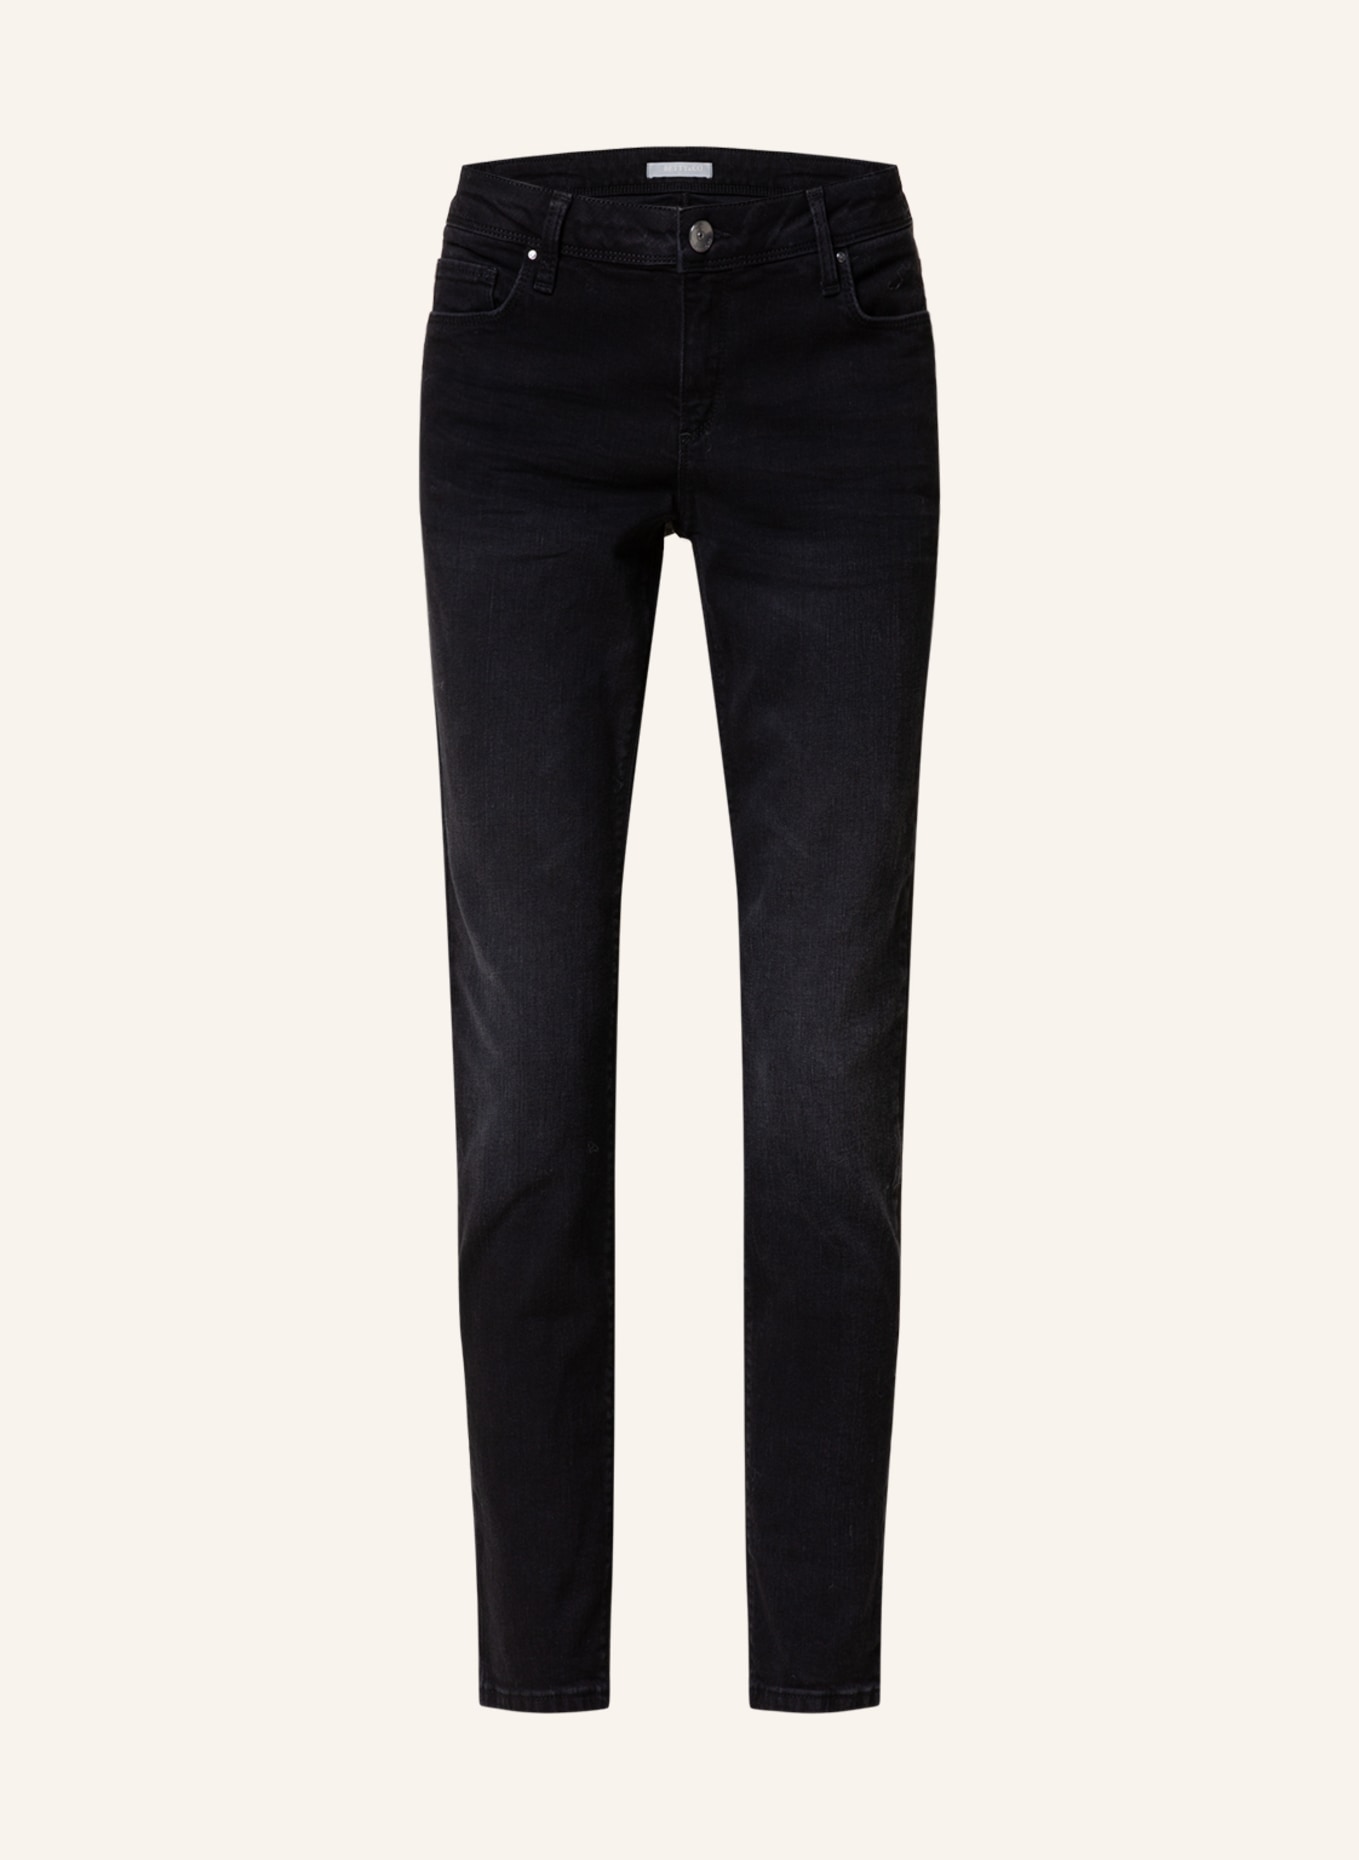 BETTY&CO Jeans SYDNEY , Farbe: 9622 BLACK DENIM (Bild 1)